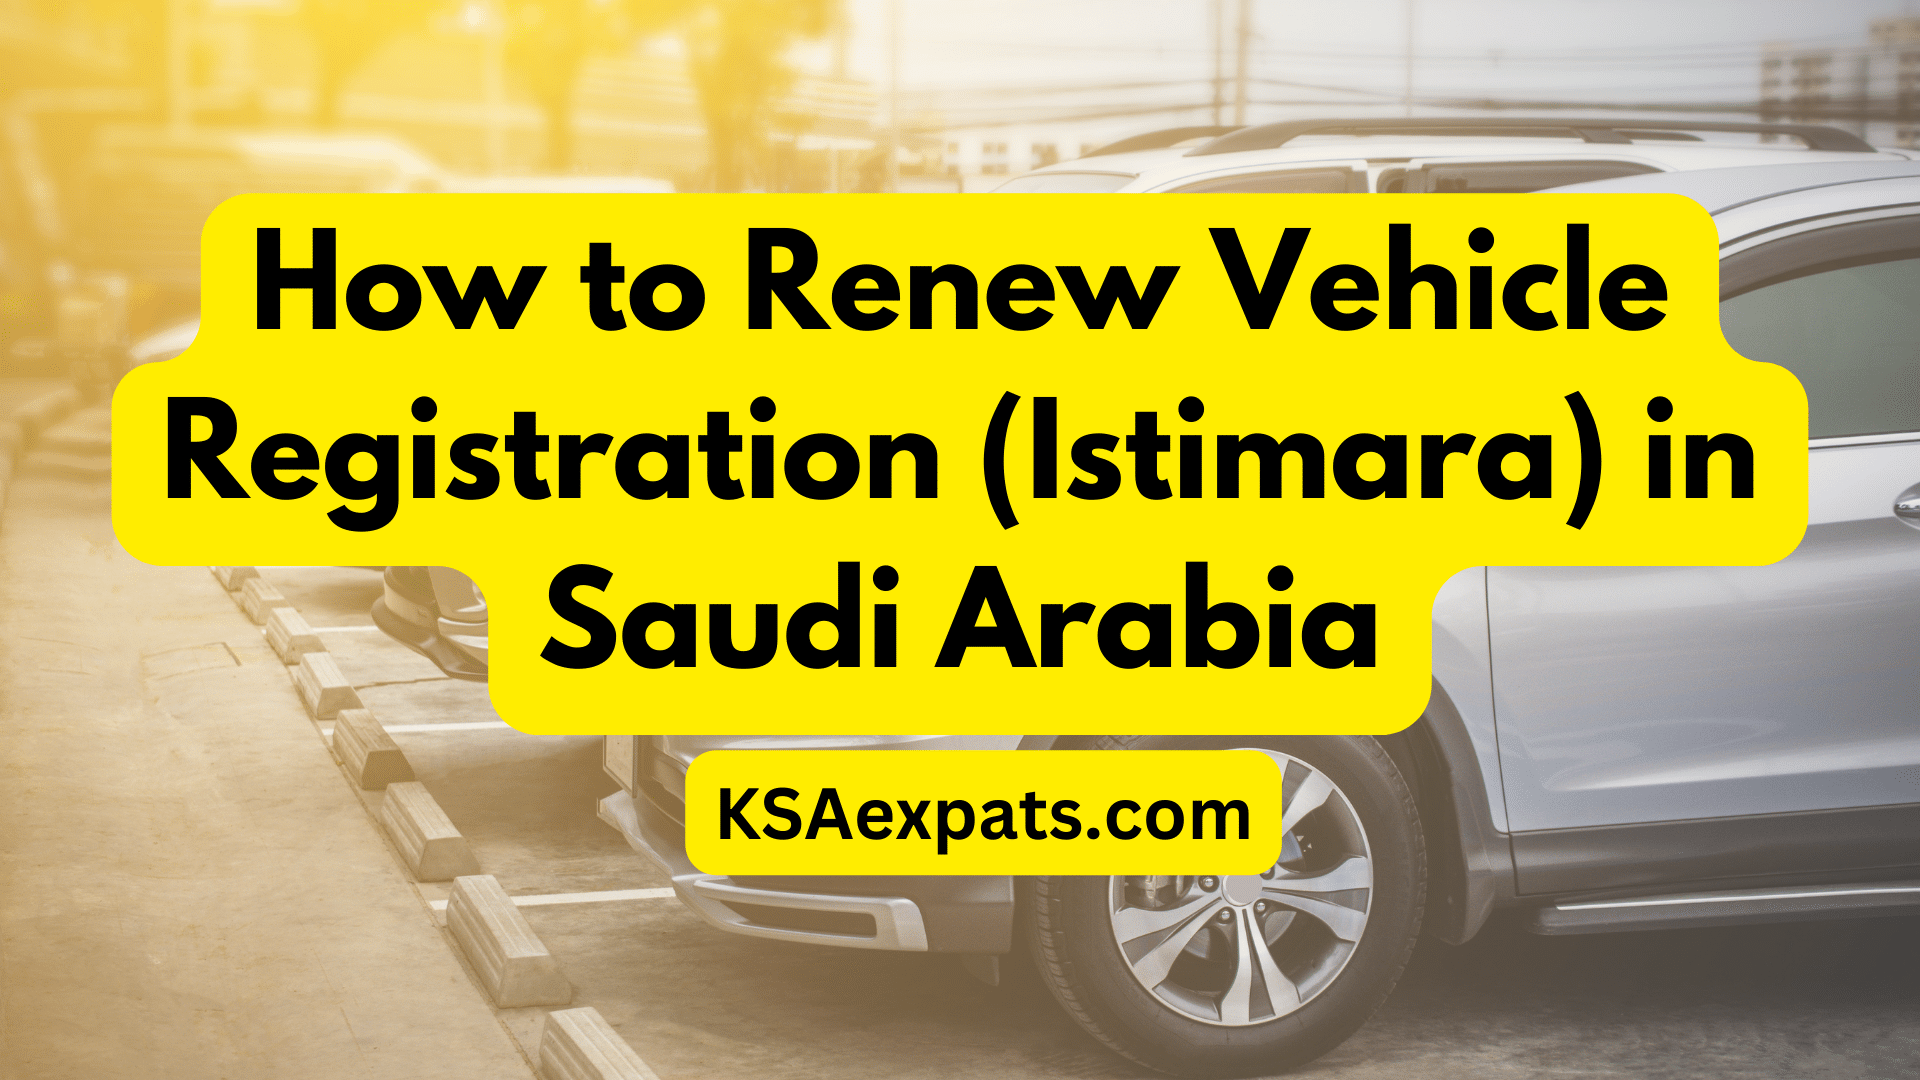 How to Renew Vehicle Registration (Istimara) in Saudi Arabia